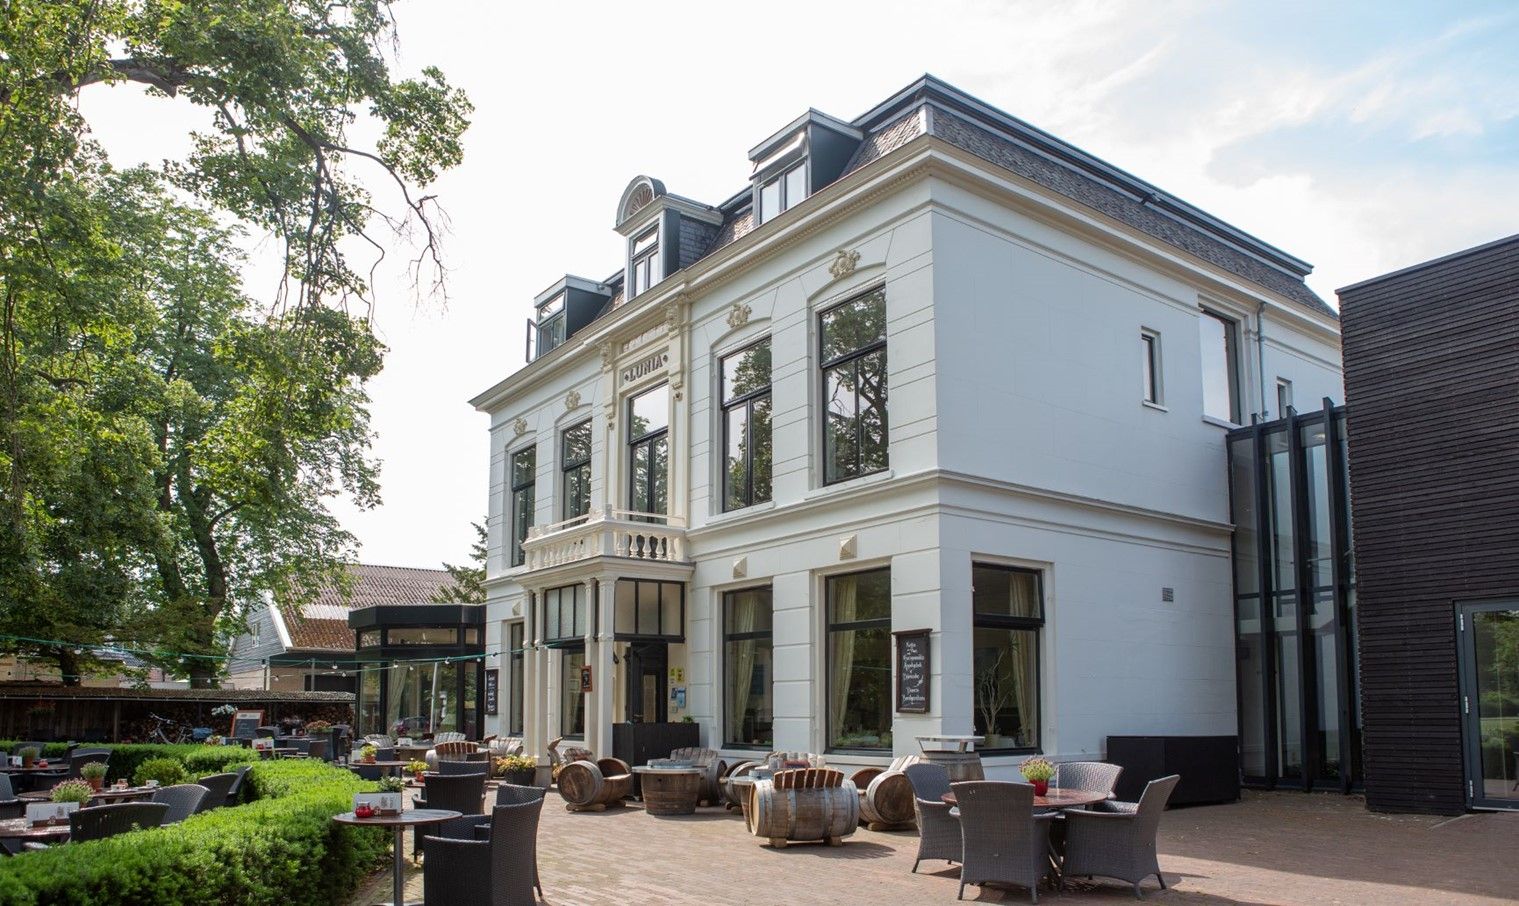 Hotel restaurant Lunia - Molenhoek 2 - Oldeberkoop